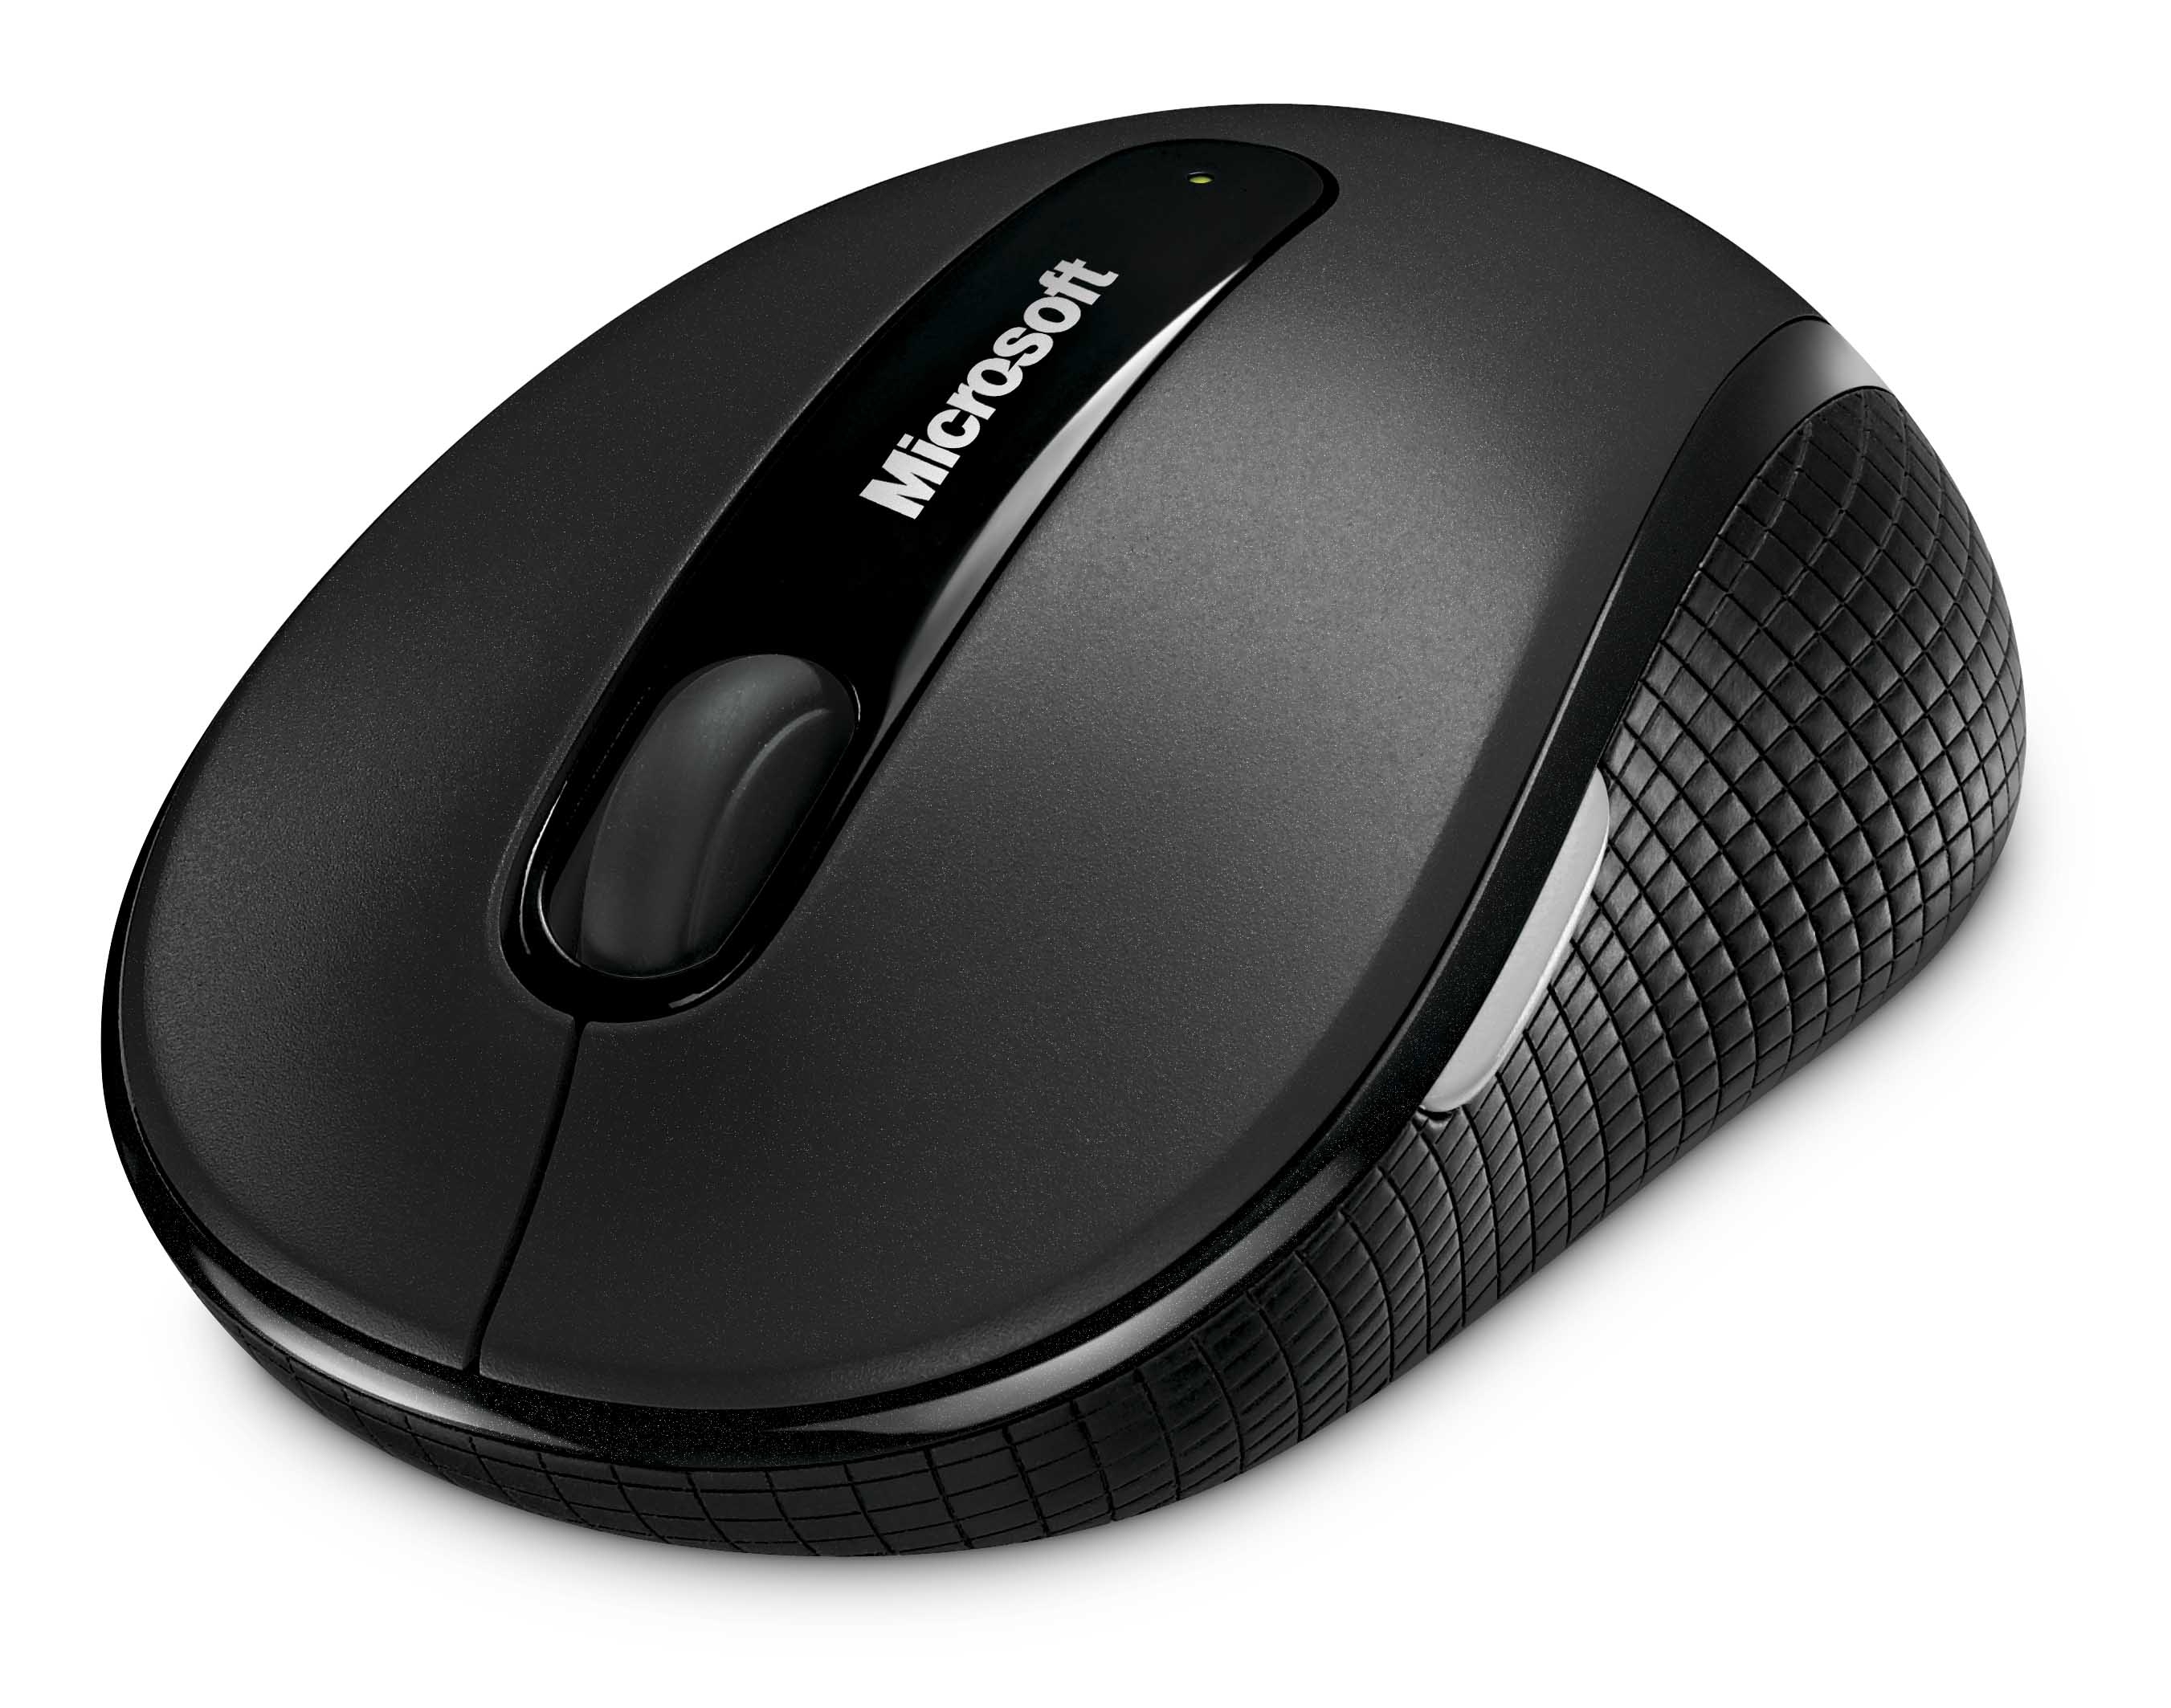 Praktisch voormalig Word gek Microsoft Wireless BlueTrack Mobile Mouse 4000 (D5D-00004) kopen »  Centralpoint